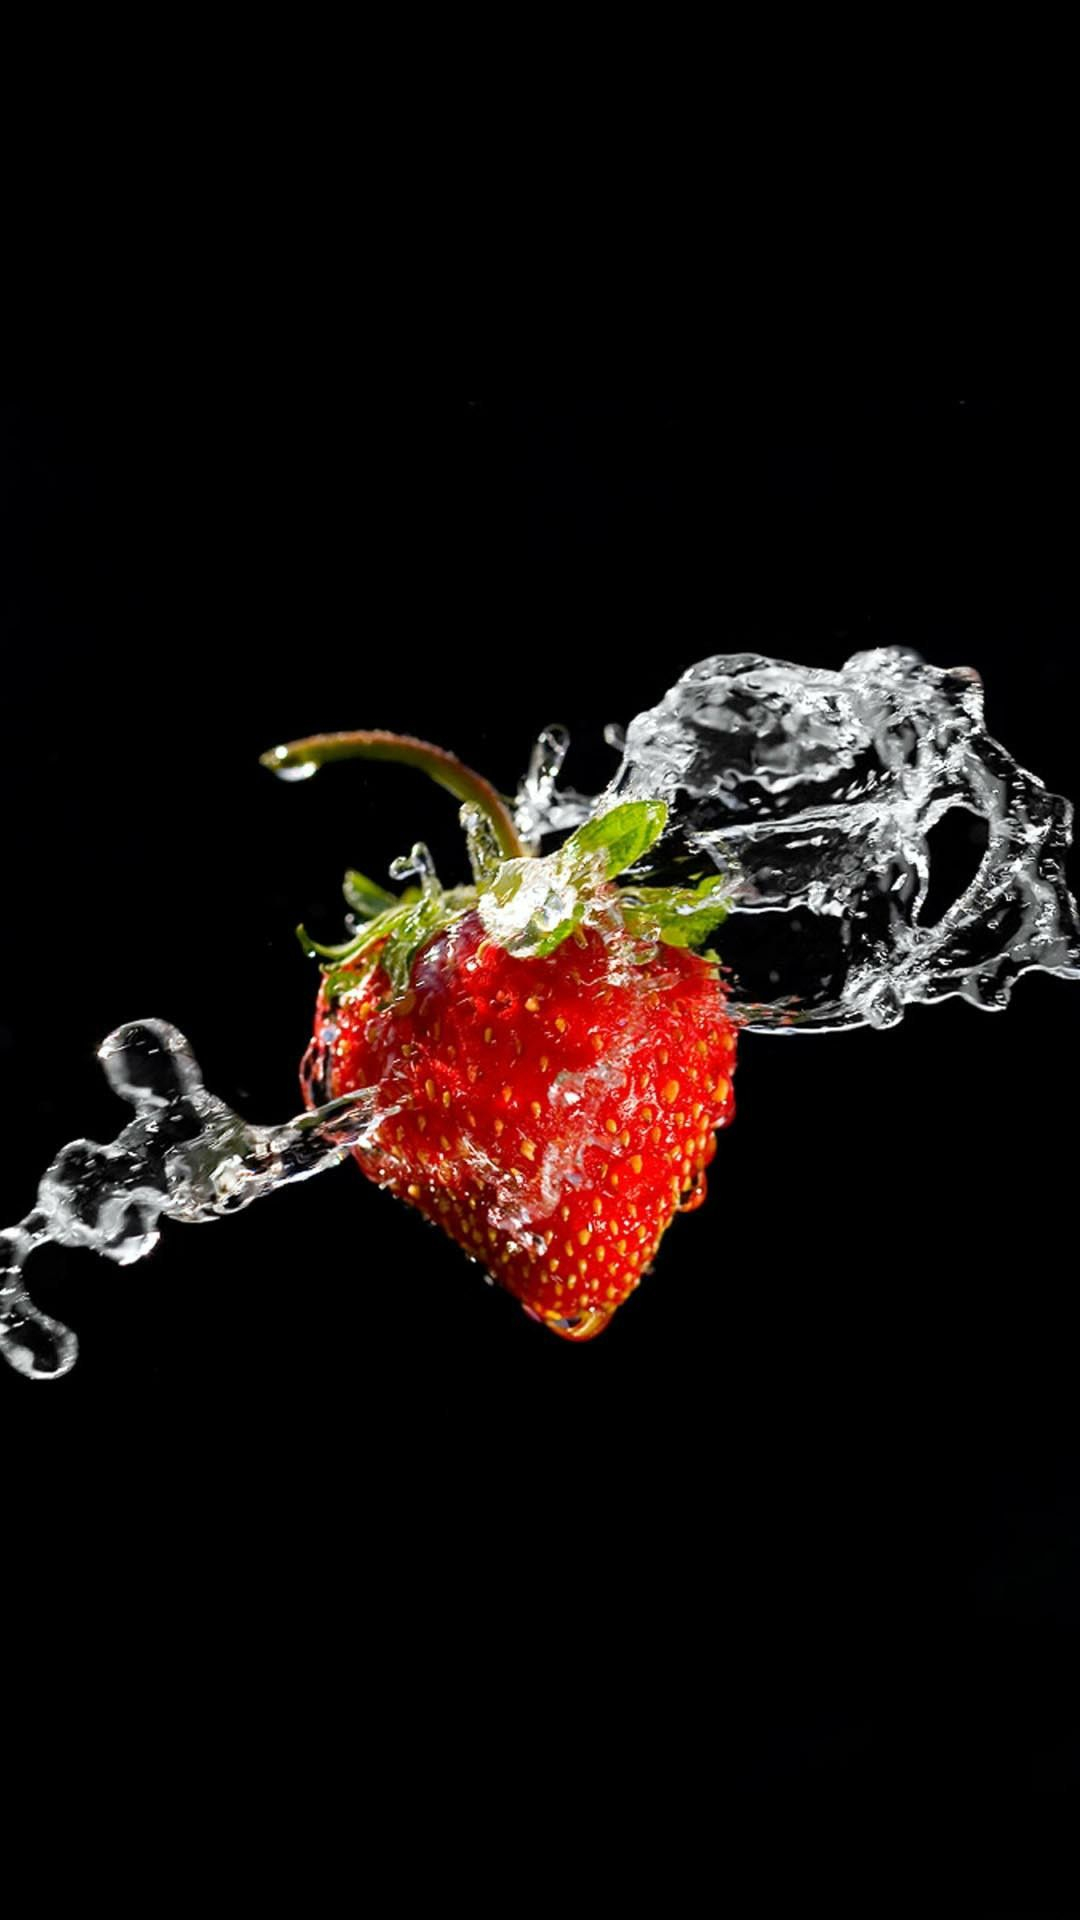 1080x1920 Strawberry Wallpaper